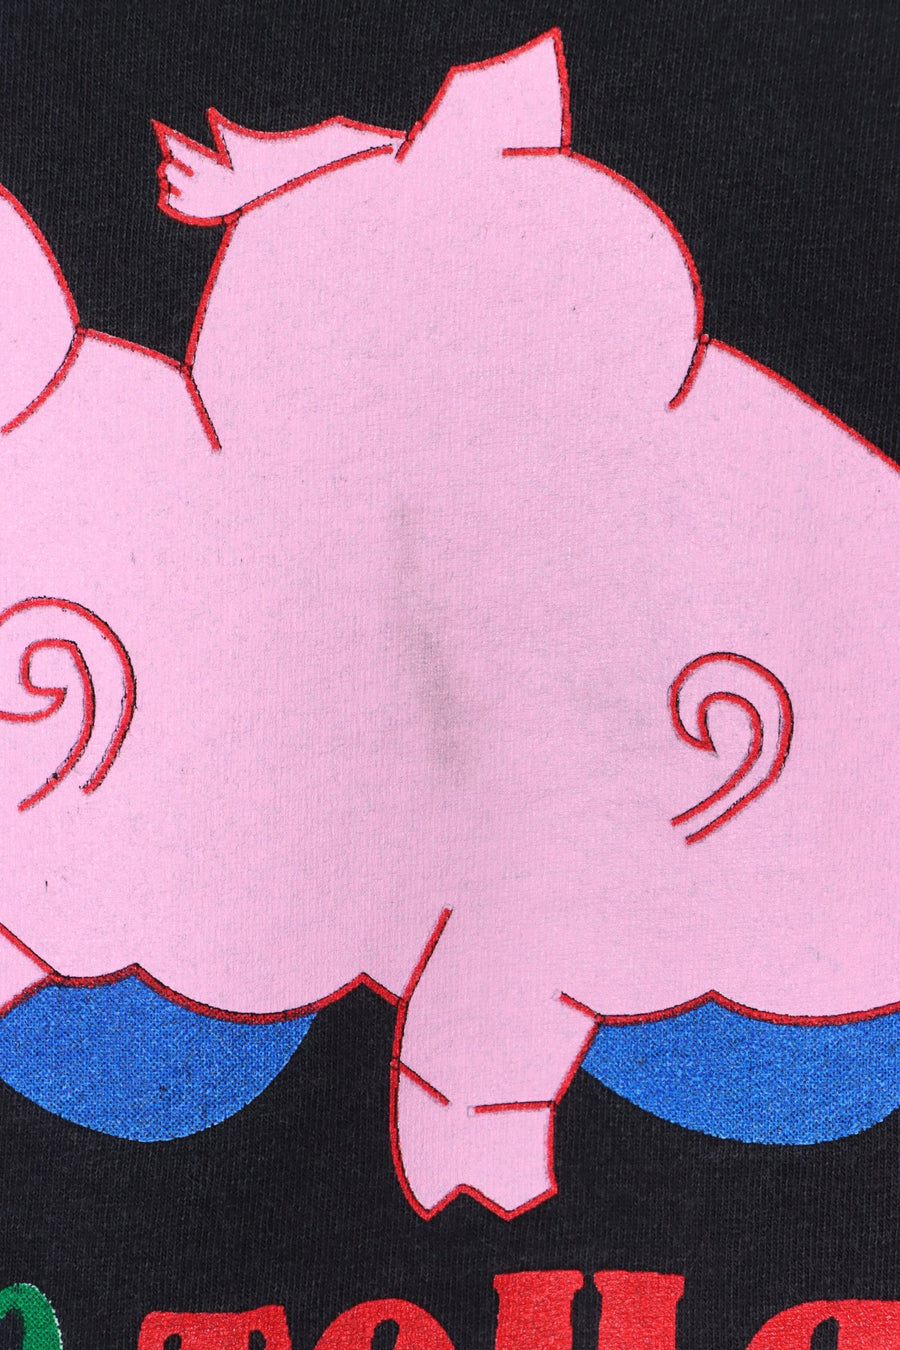 Red Hot & Blue Memphis BBQ Rock Pigs Single Stitch Front Back T-Shirt (L)